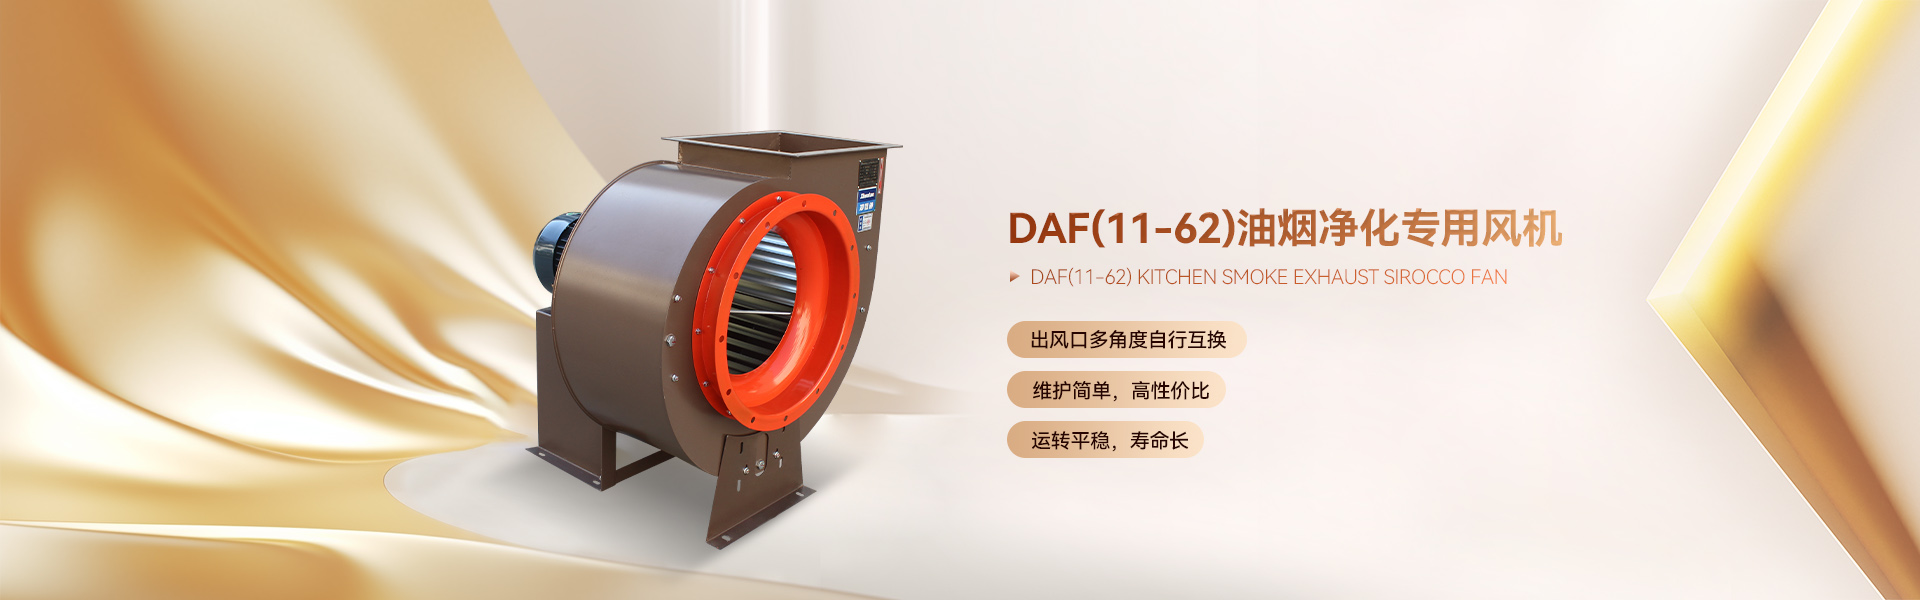 DAF(11-62)油烟净化专用风机